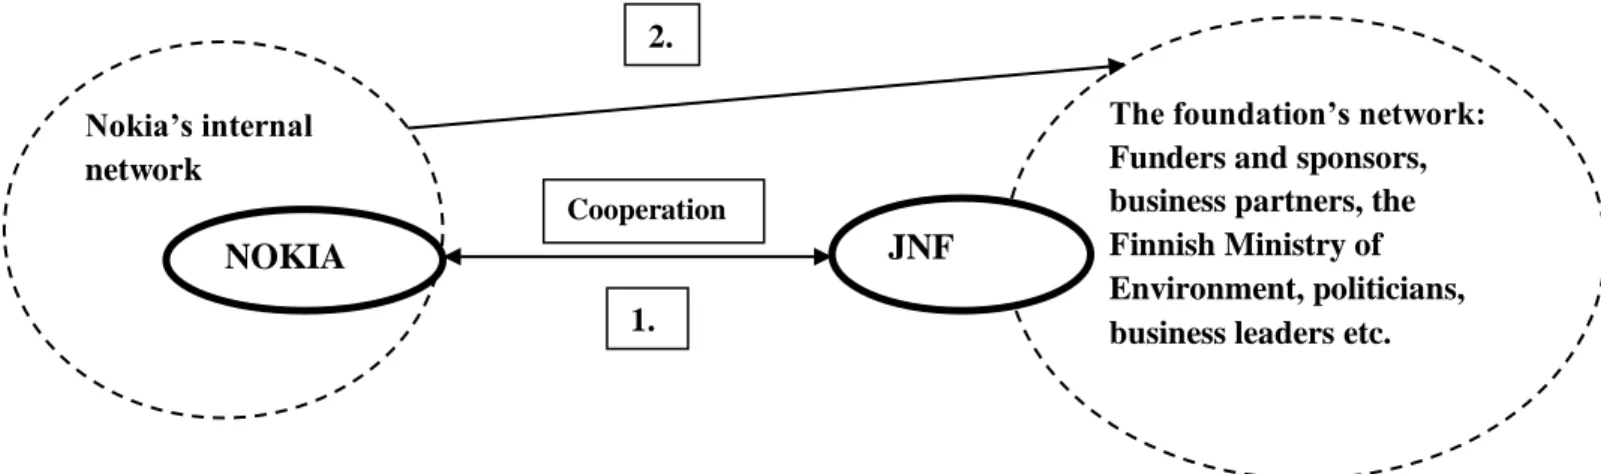 Figure 4.1 Case 1: Nokia and John Nurminen Foundation 